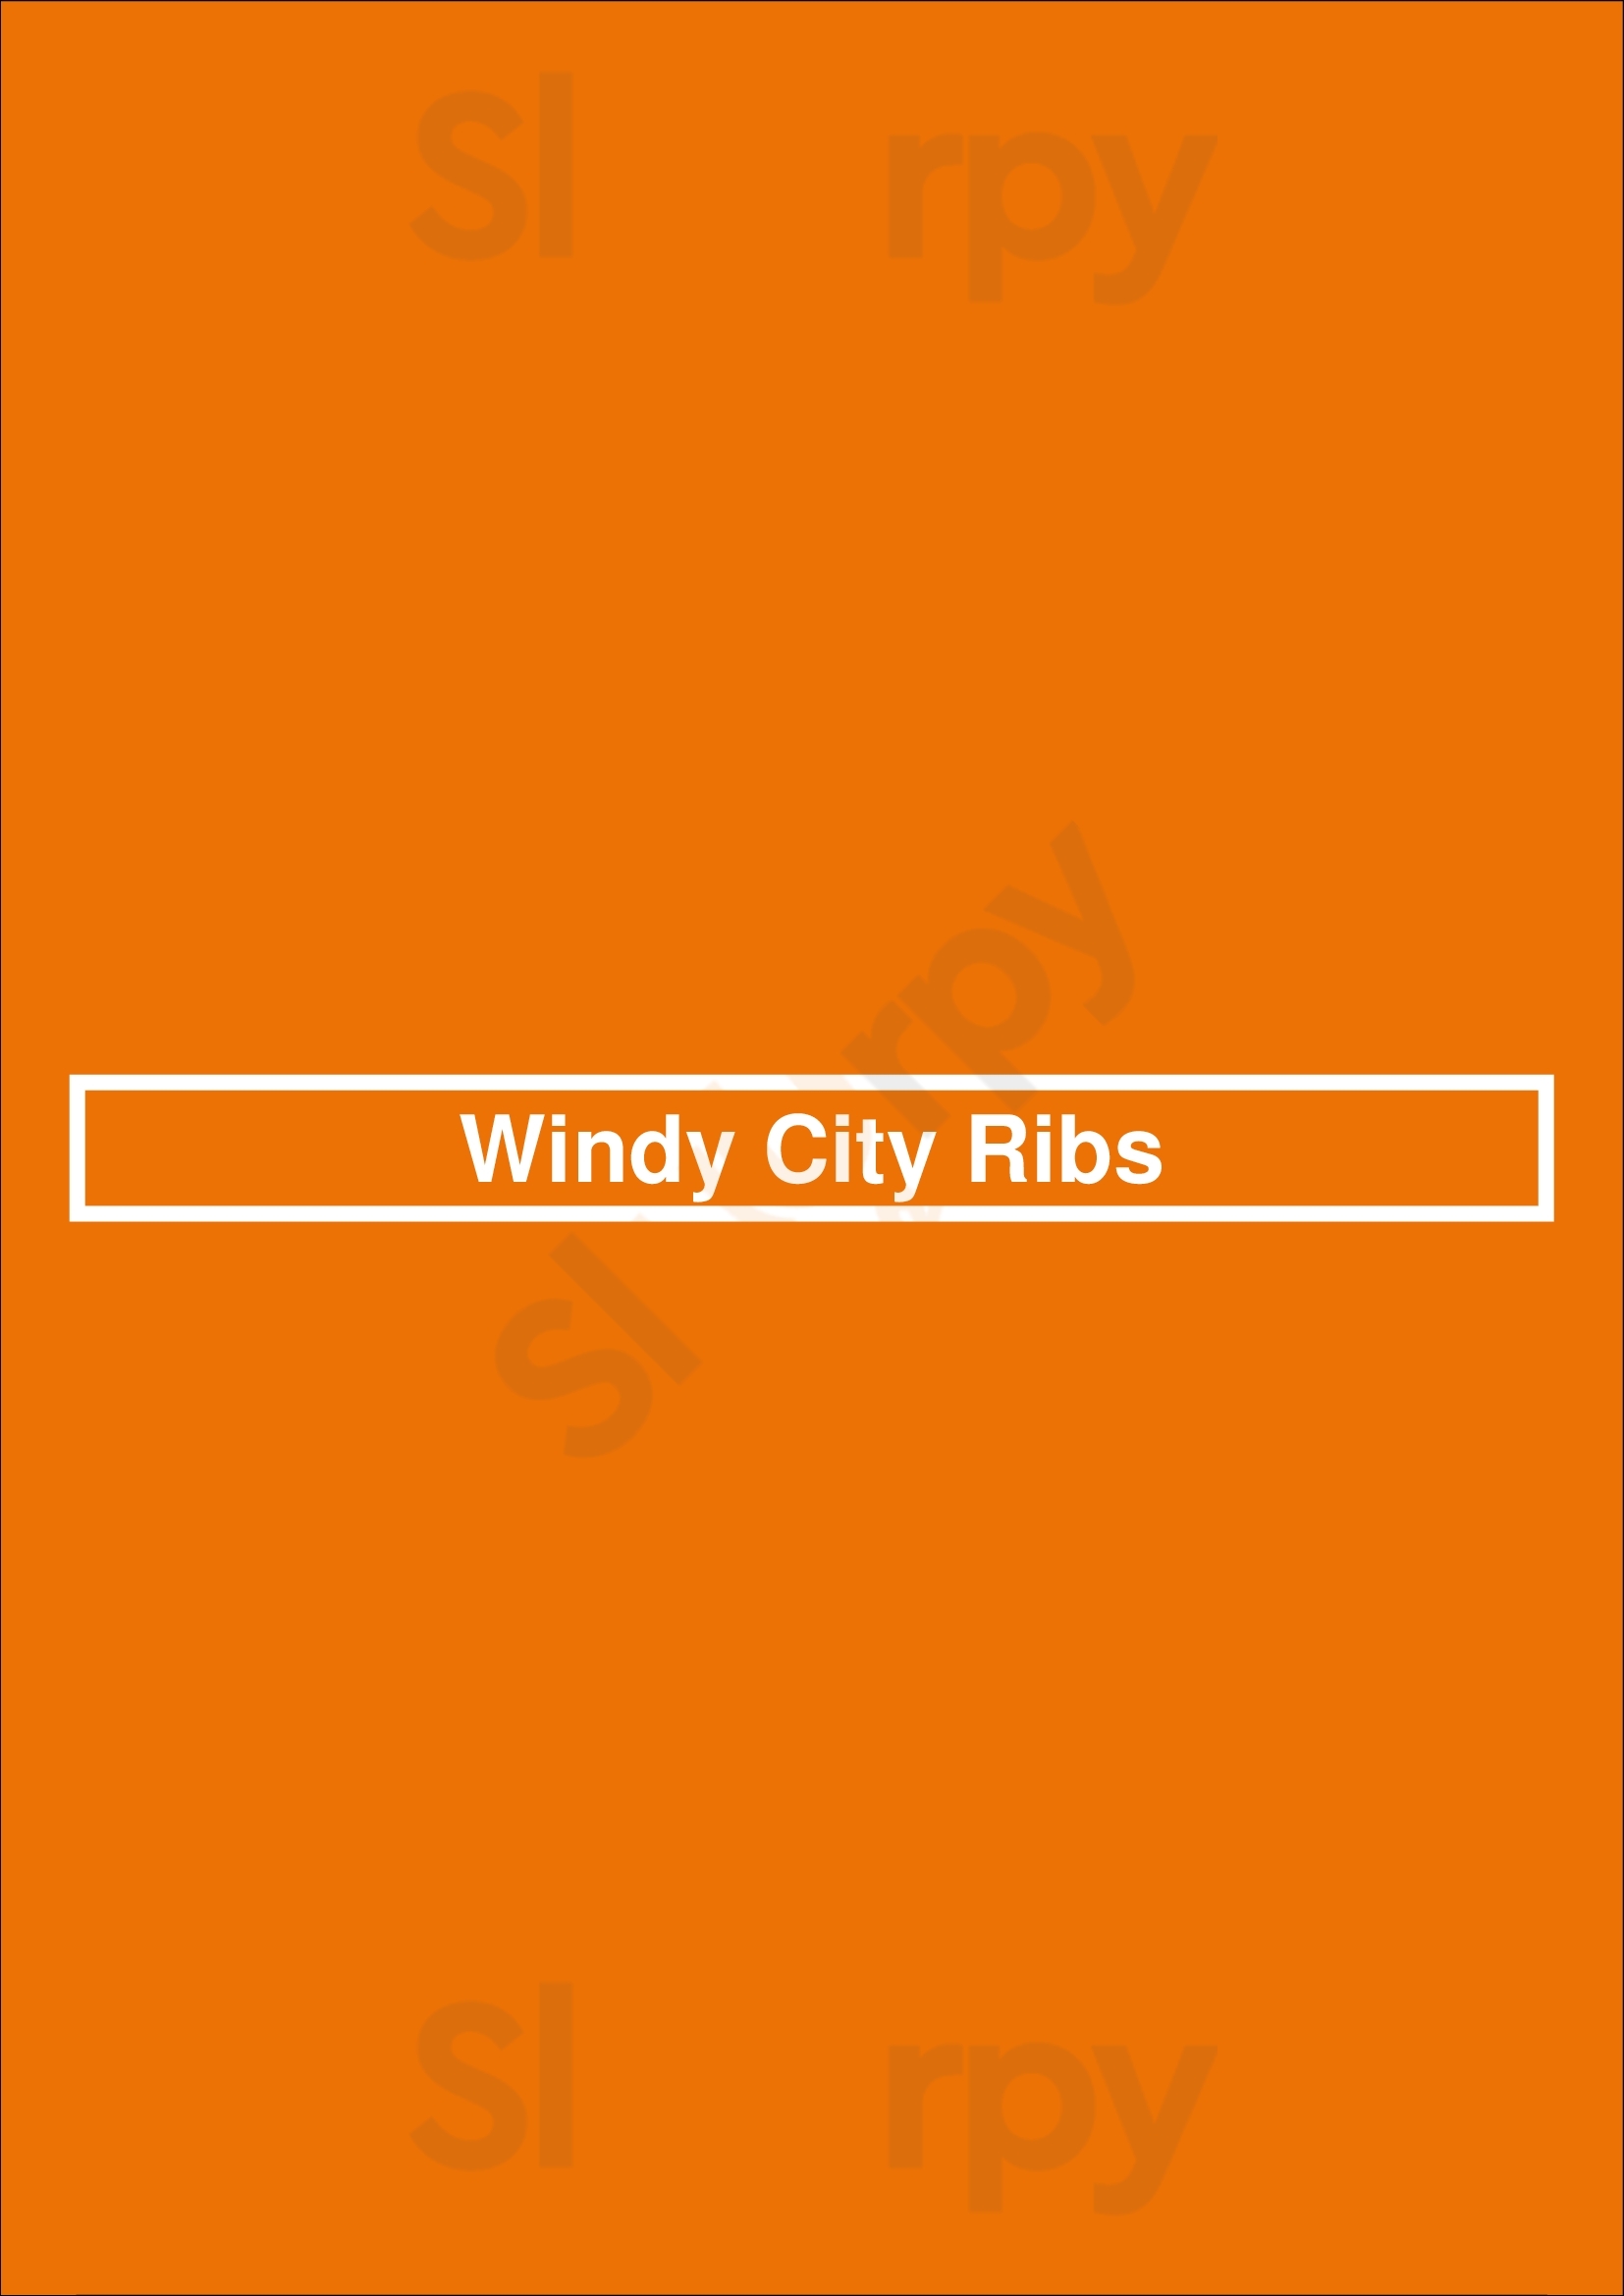 Windy City Ribs Chicago Menu - 1